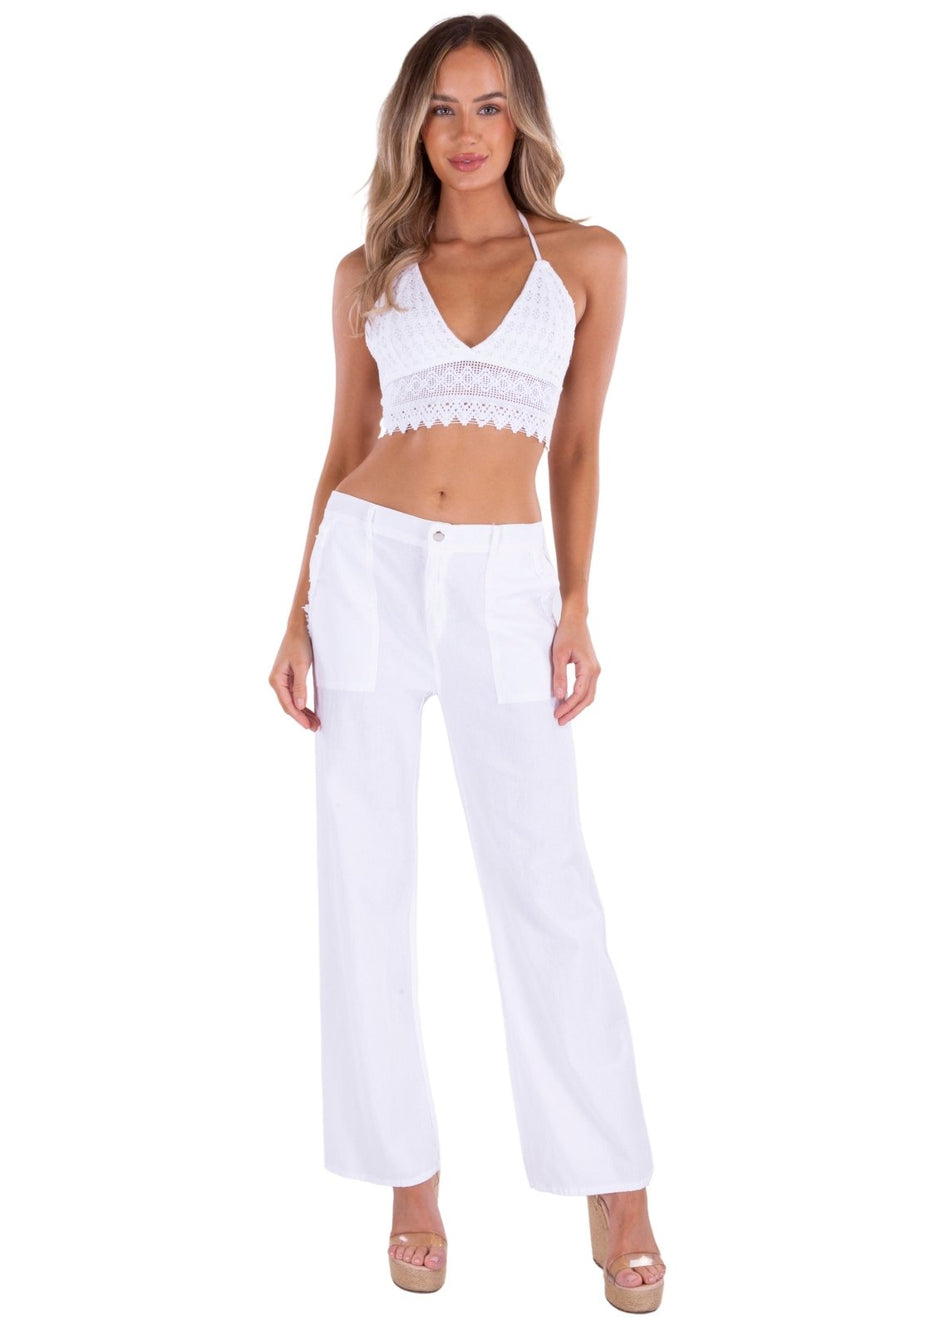 'Calypso' Flare Pants White - Seaspice Resort Wear